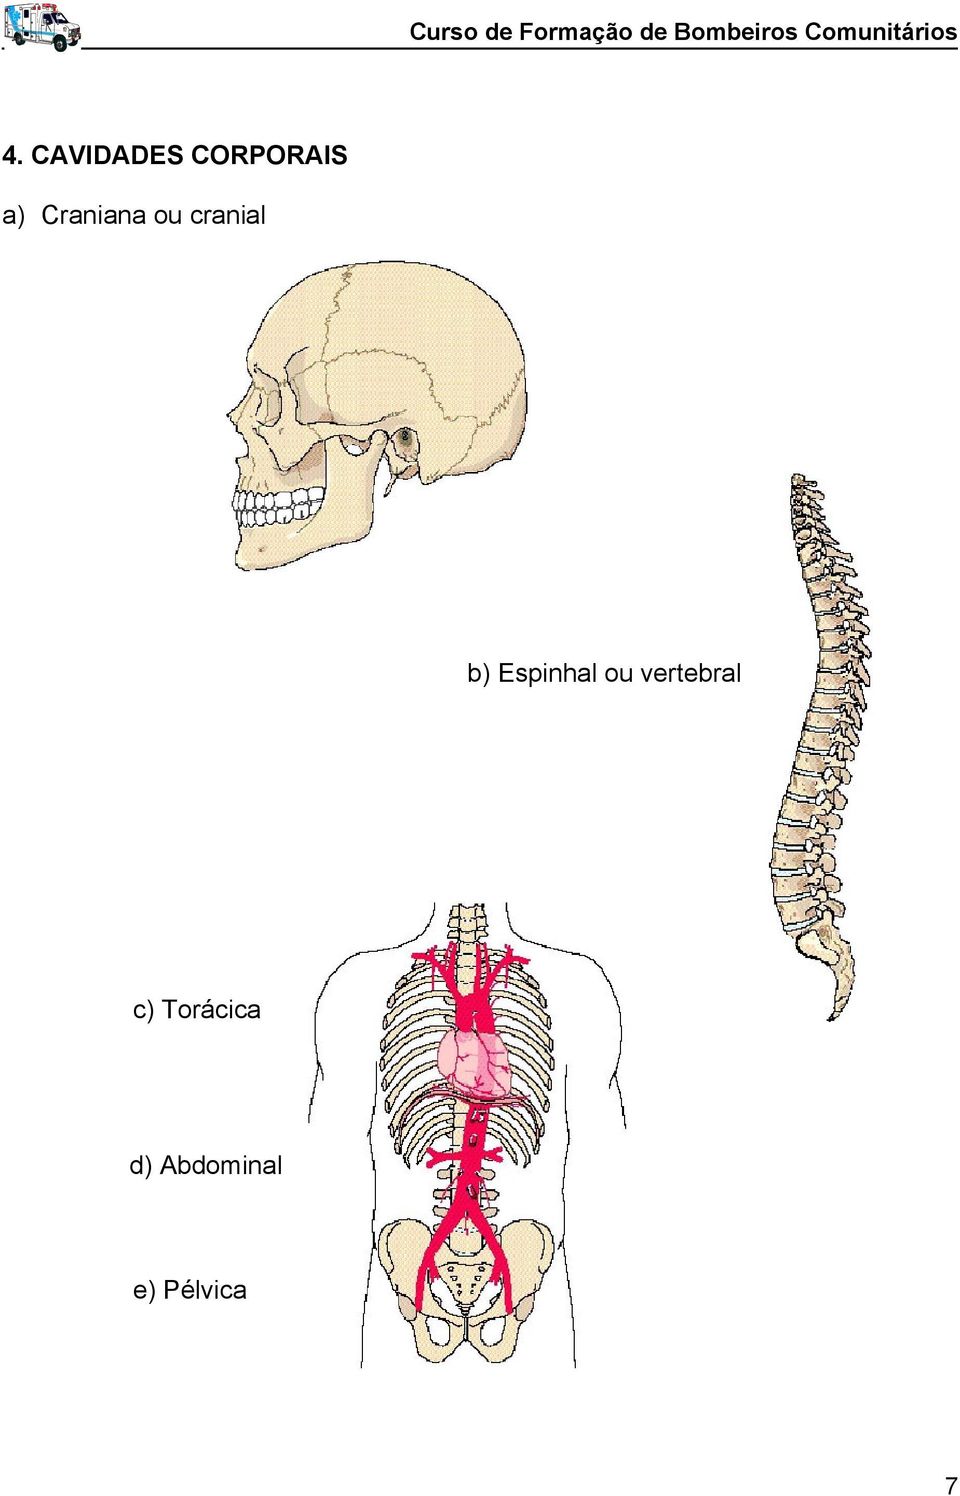 Espinhal ou vertebral c)